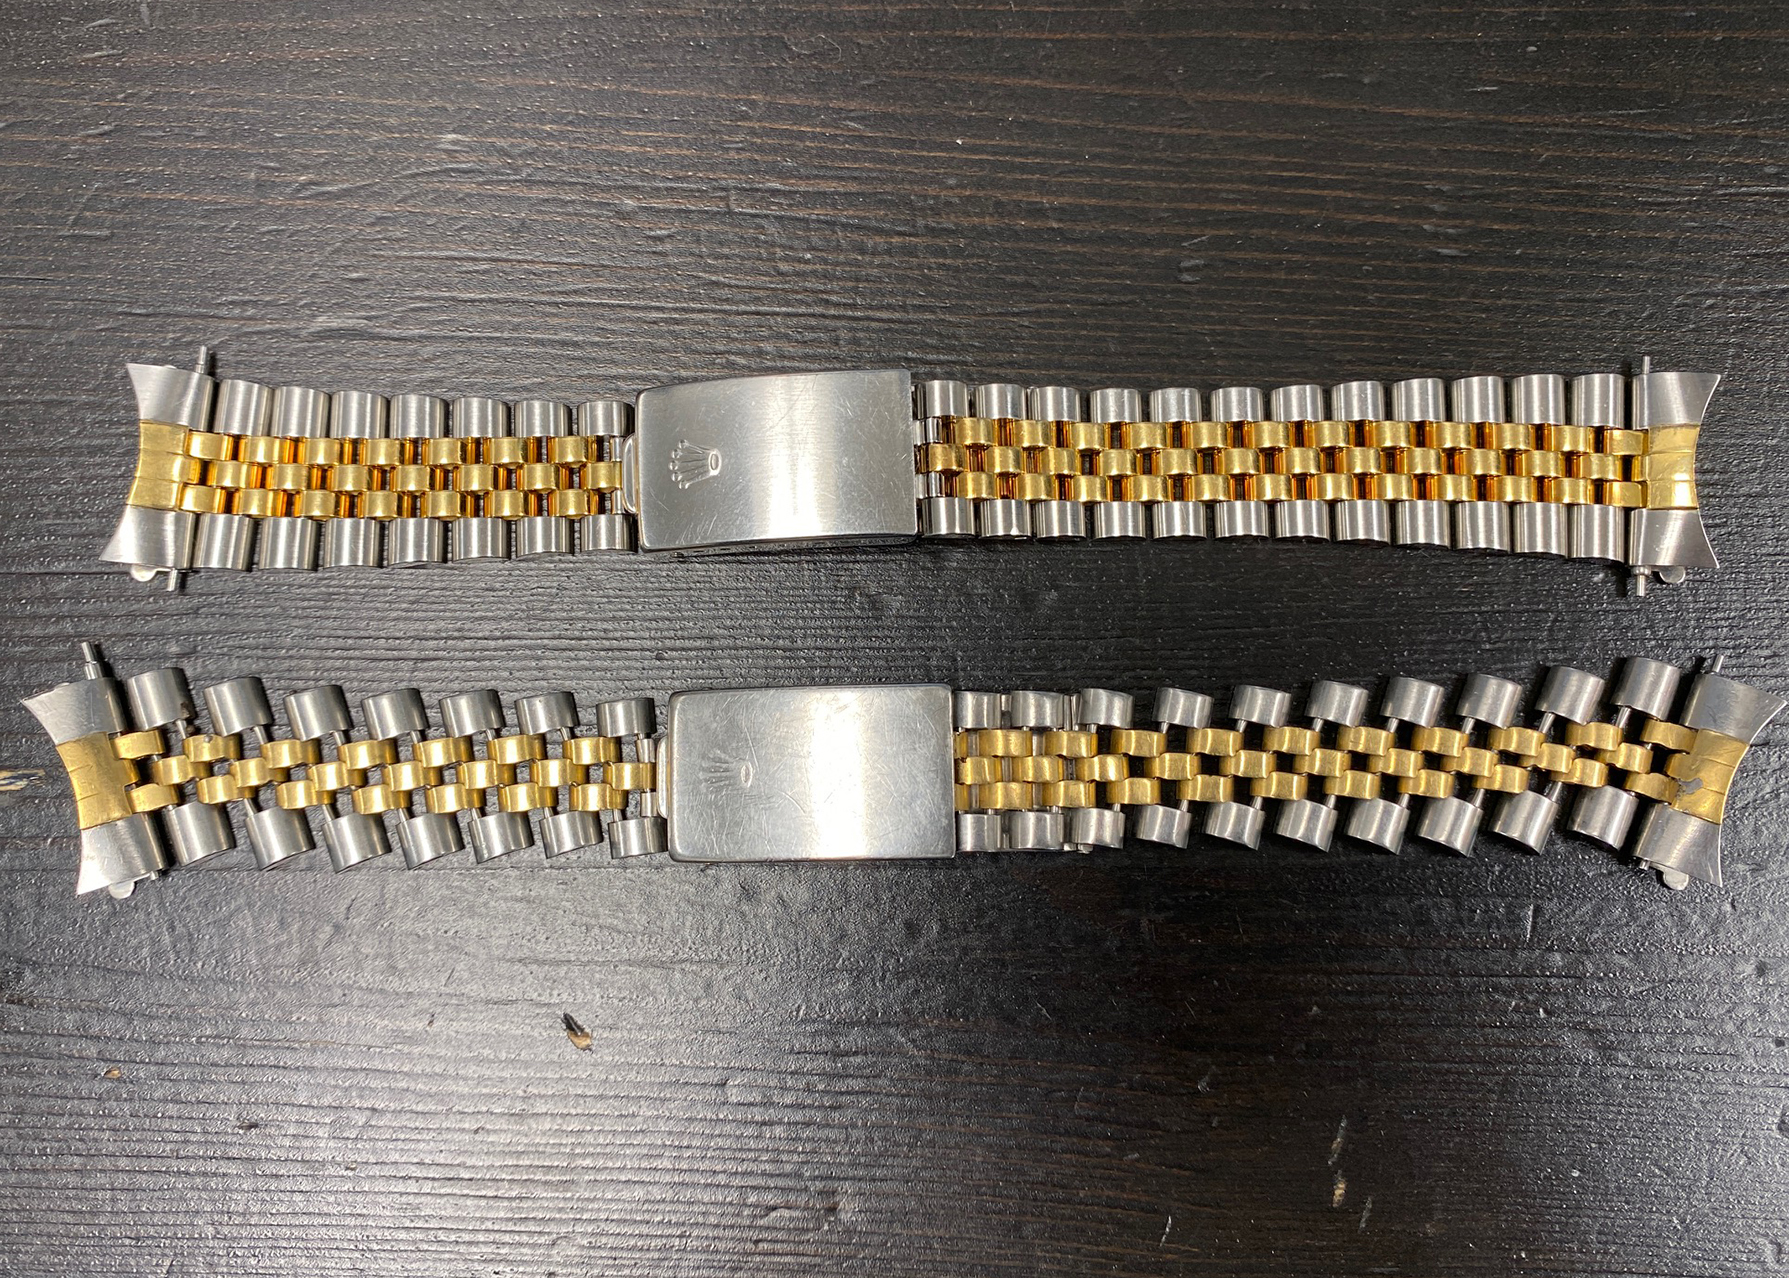 Rolex Bracelet Tightening: To Tighten or Not to Tighten | The Watch Buyers Group